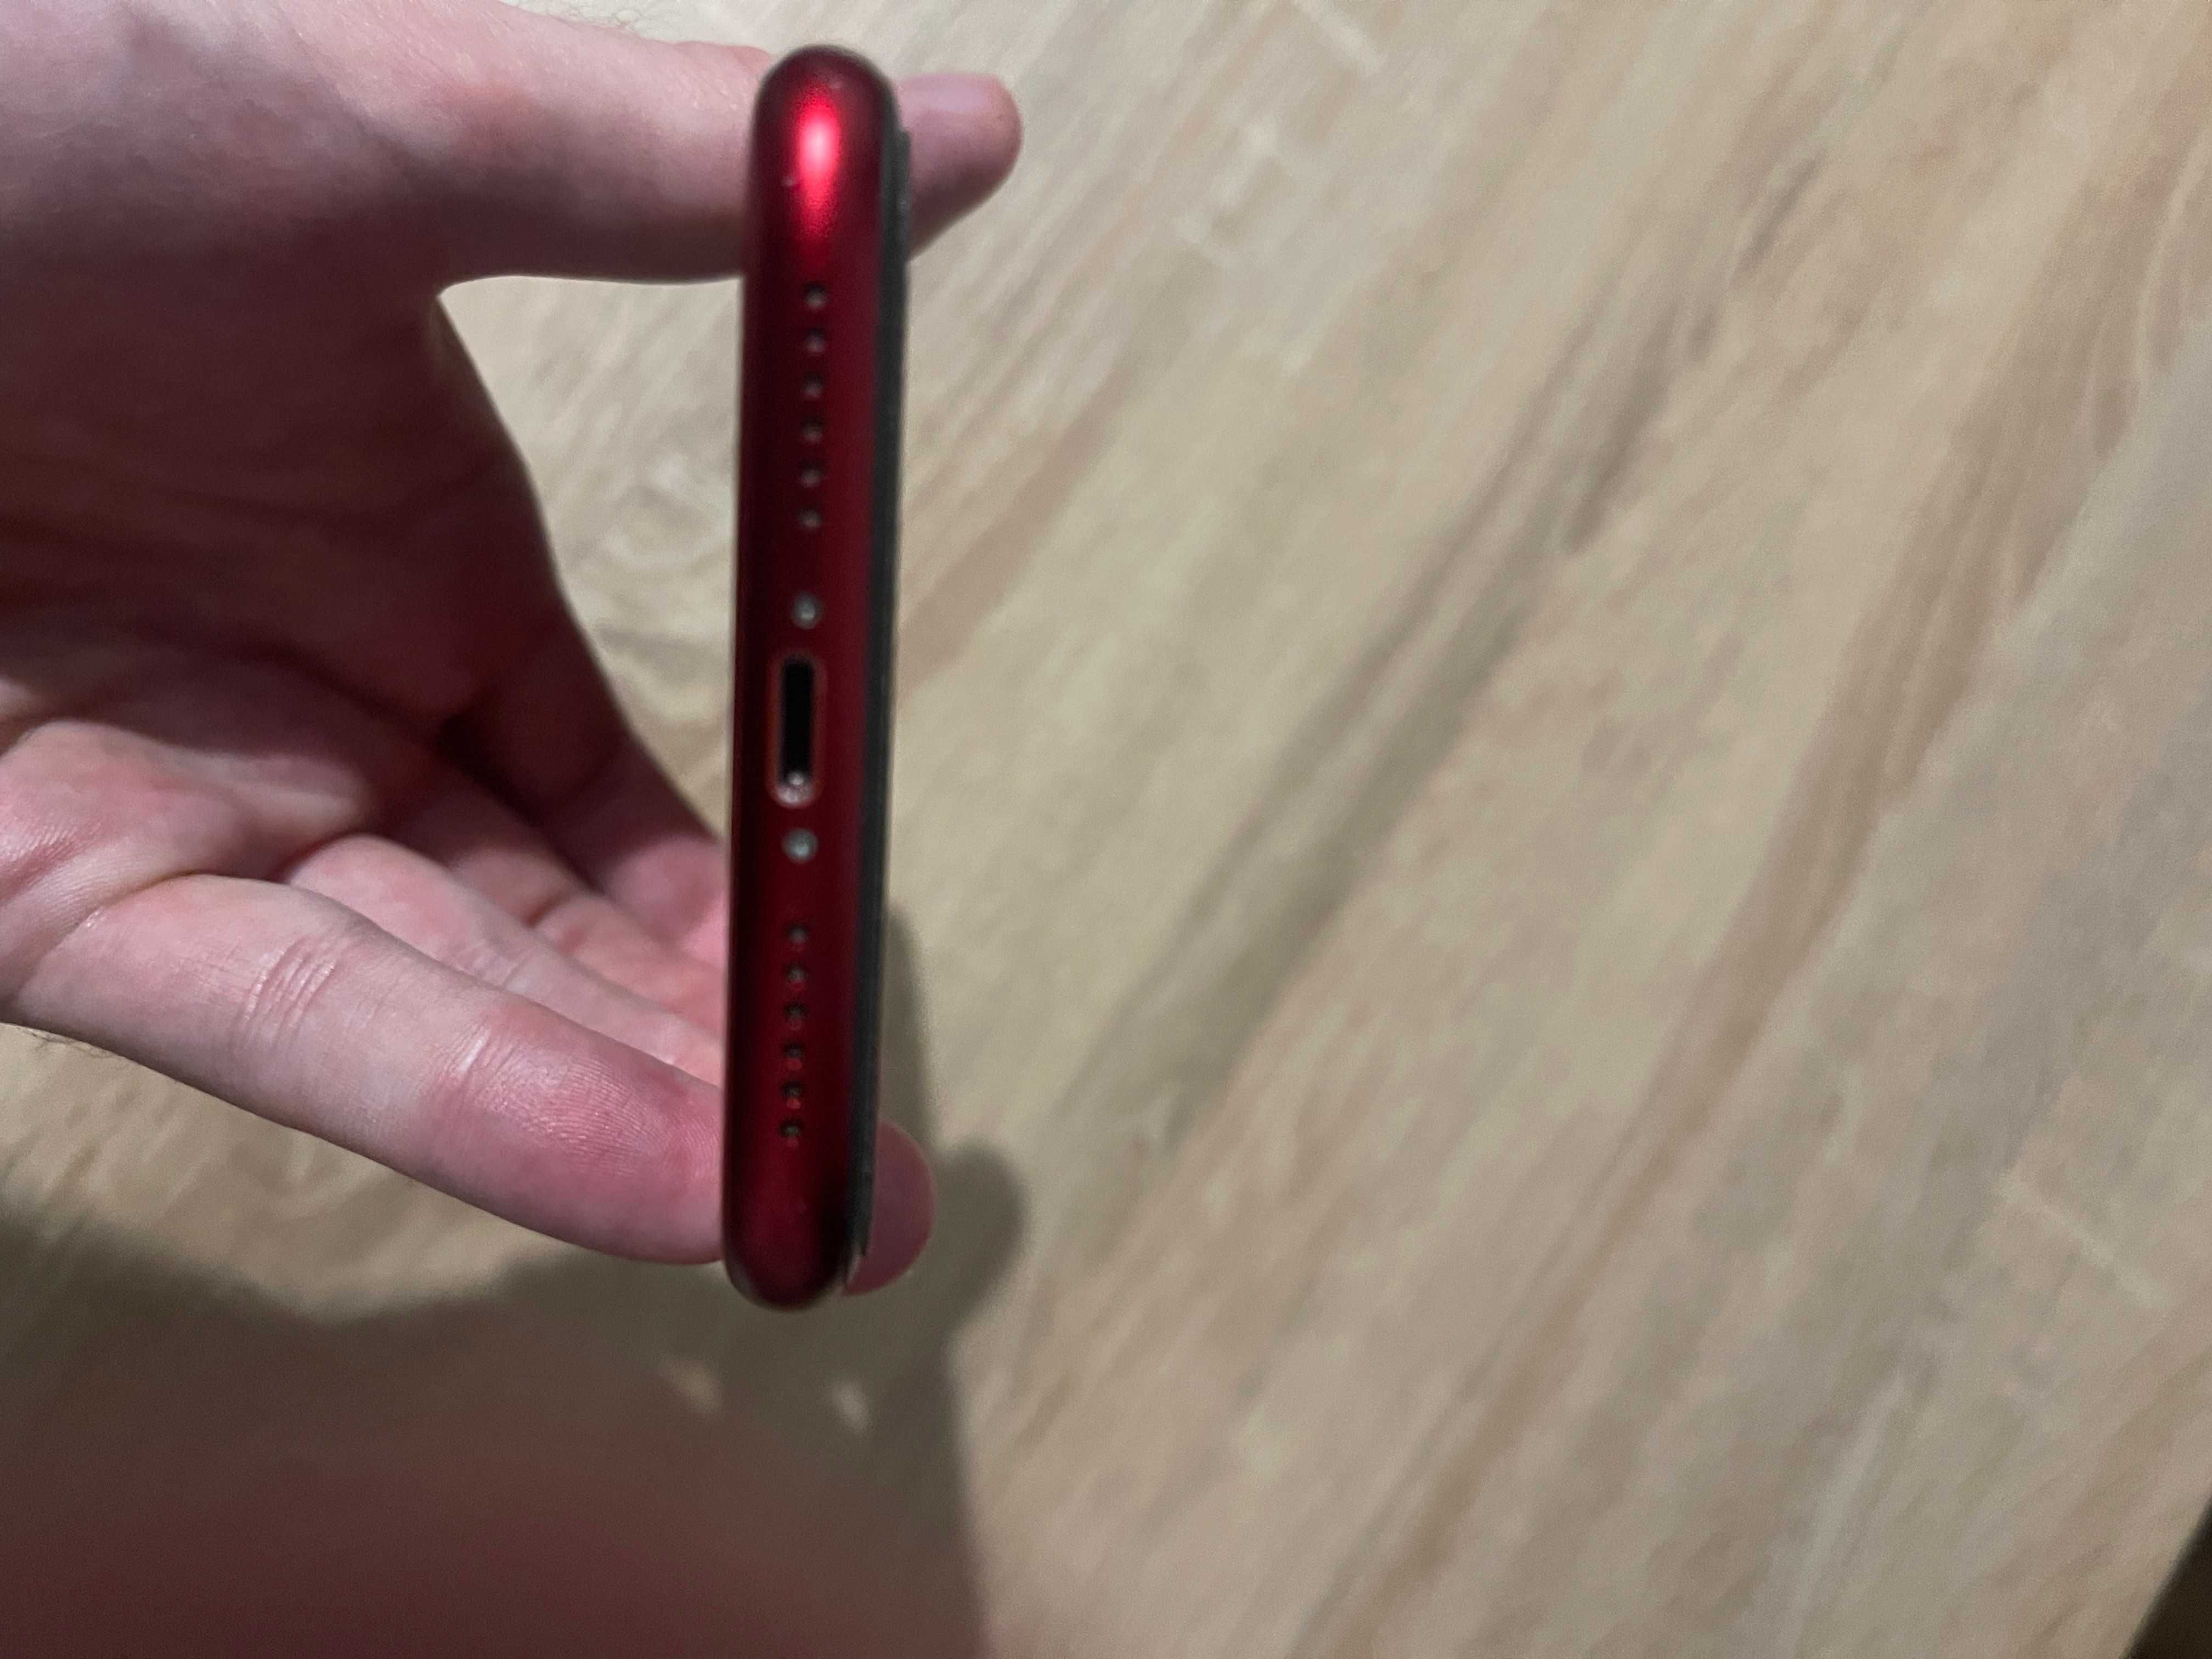 iPhone 10 XR 64GB Red почти новый пользовались 2 месяца